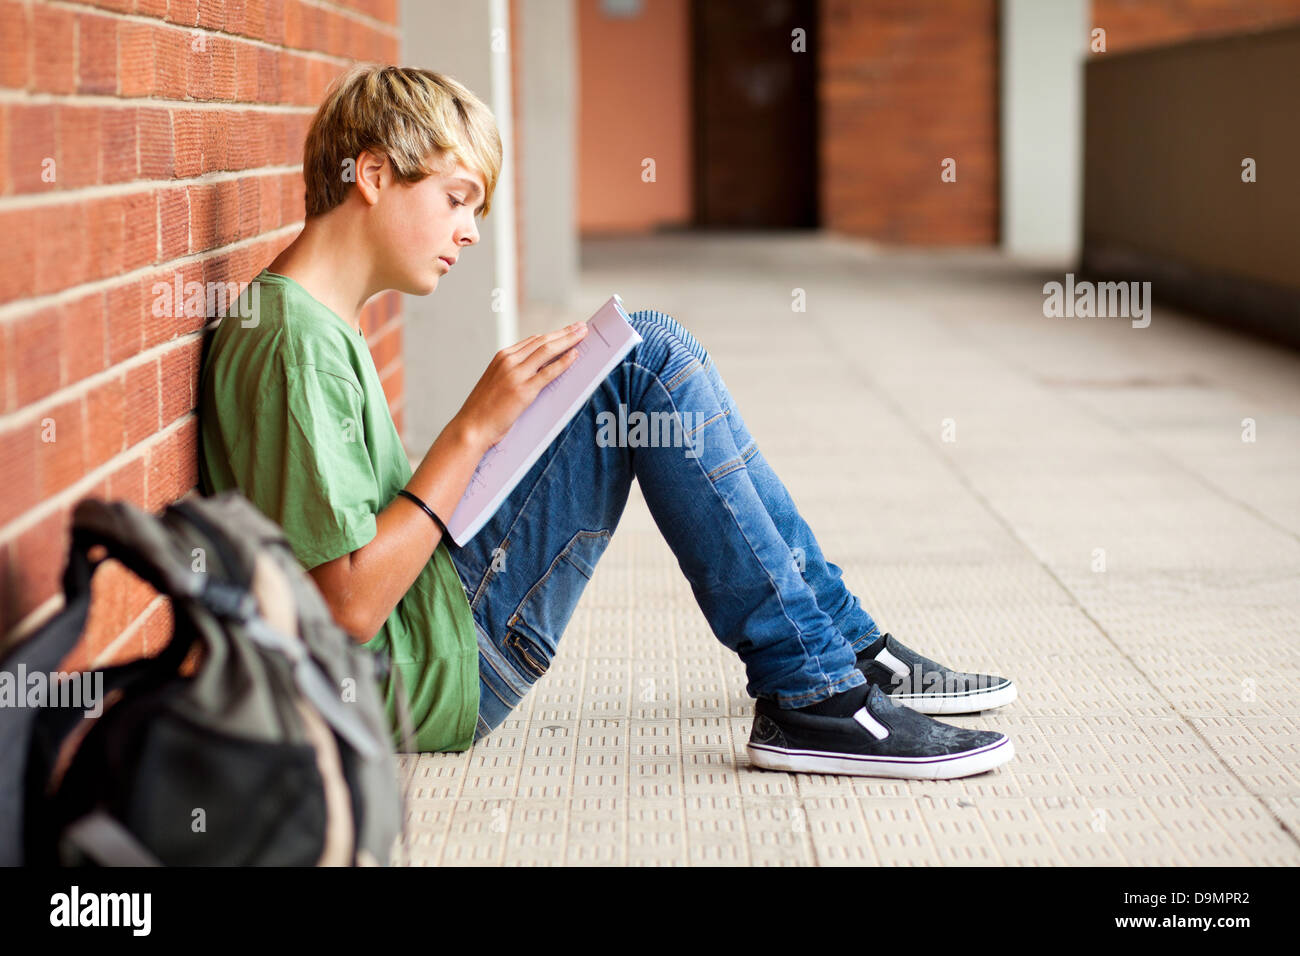 teen high school student reading book in school passage Stock Photo